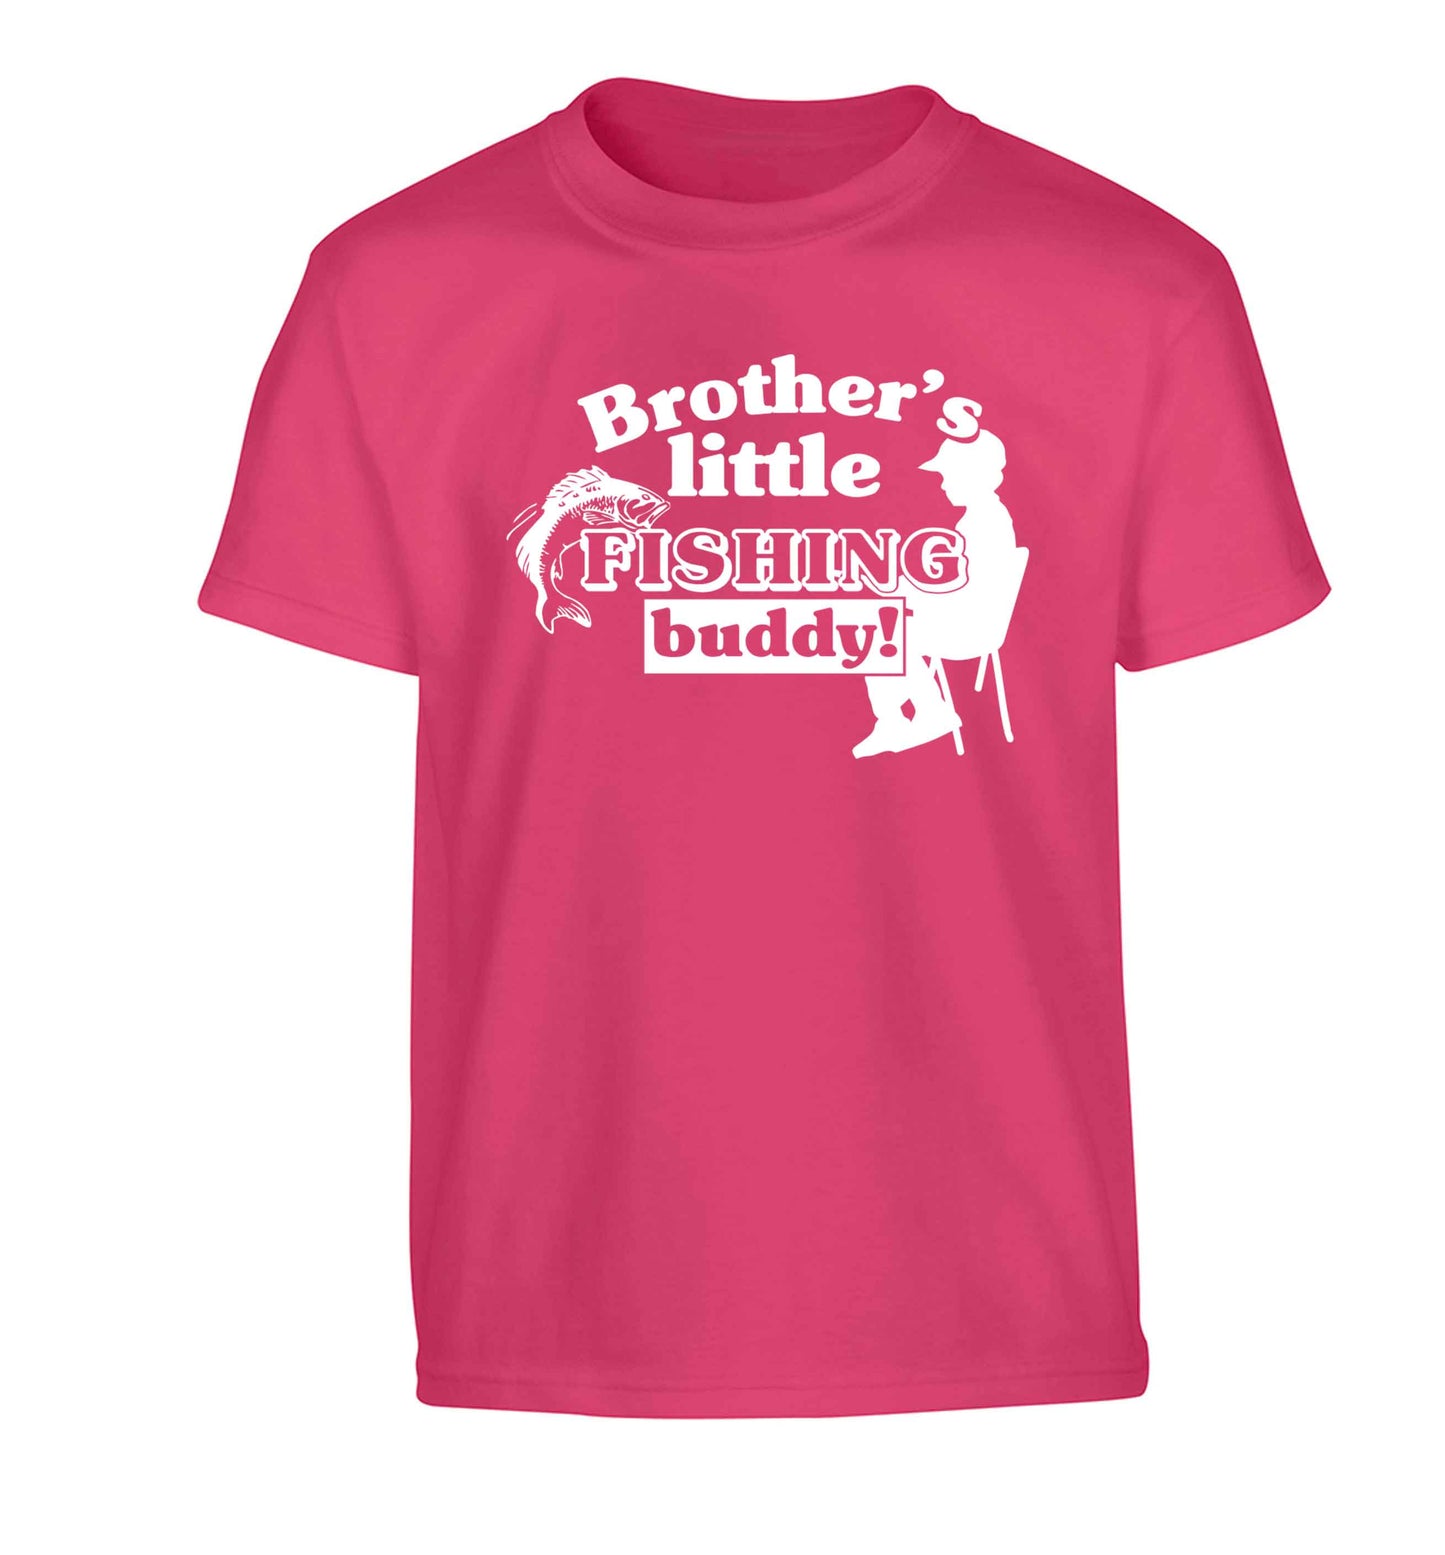 Brother's little fishing buddy Children's pink Tshirt 12-13 Years